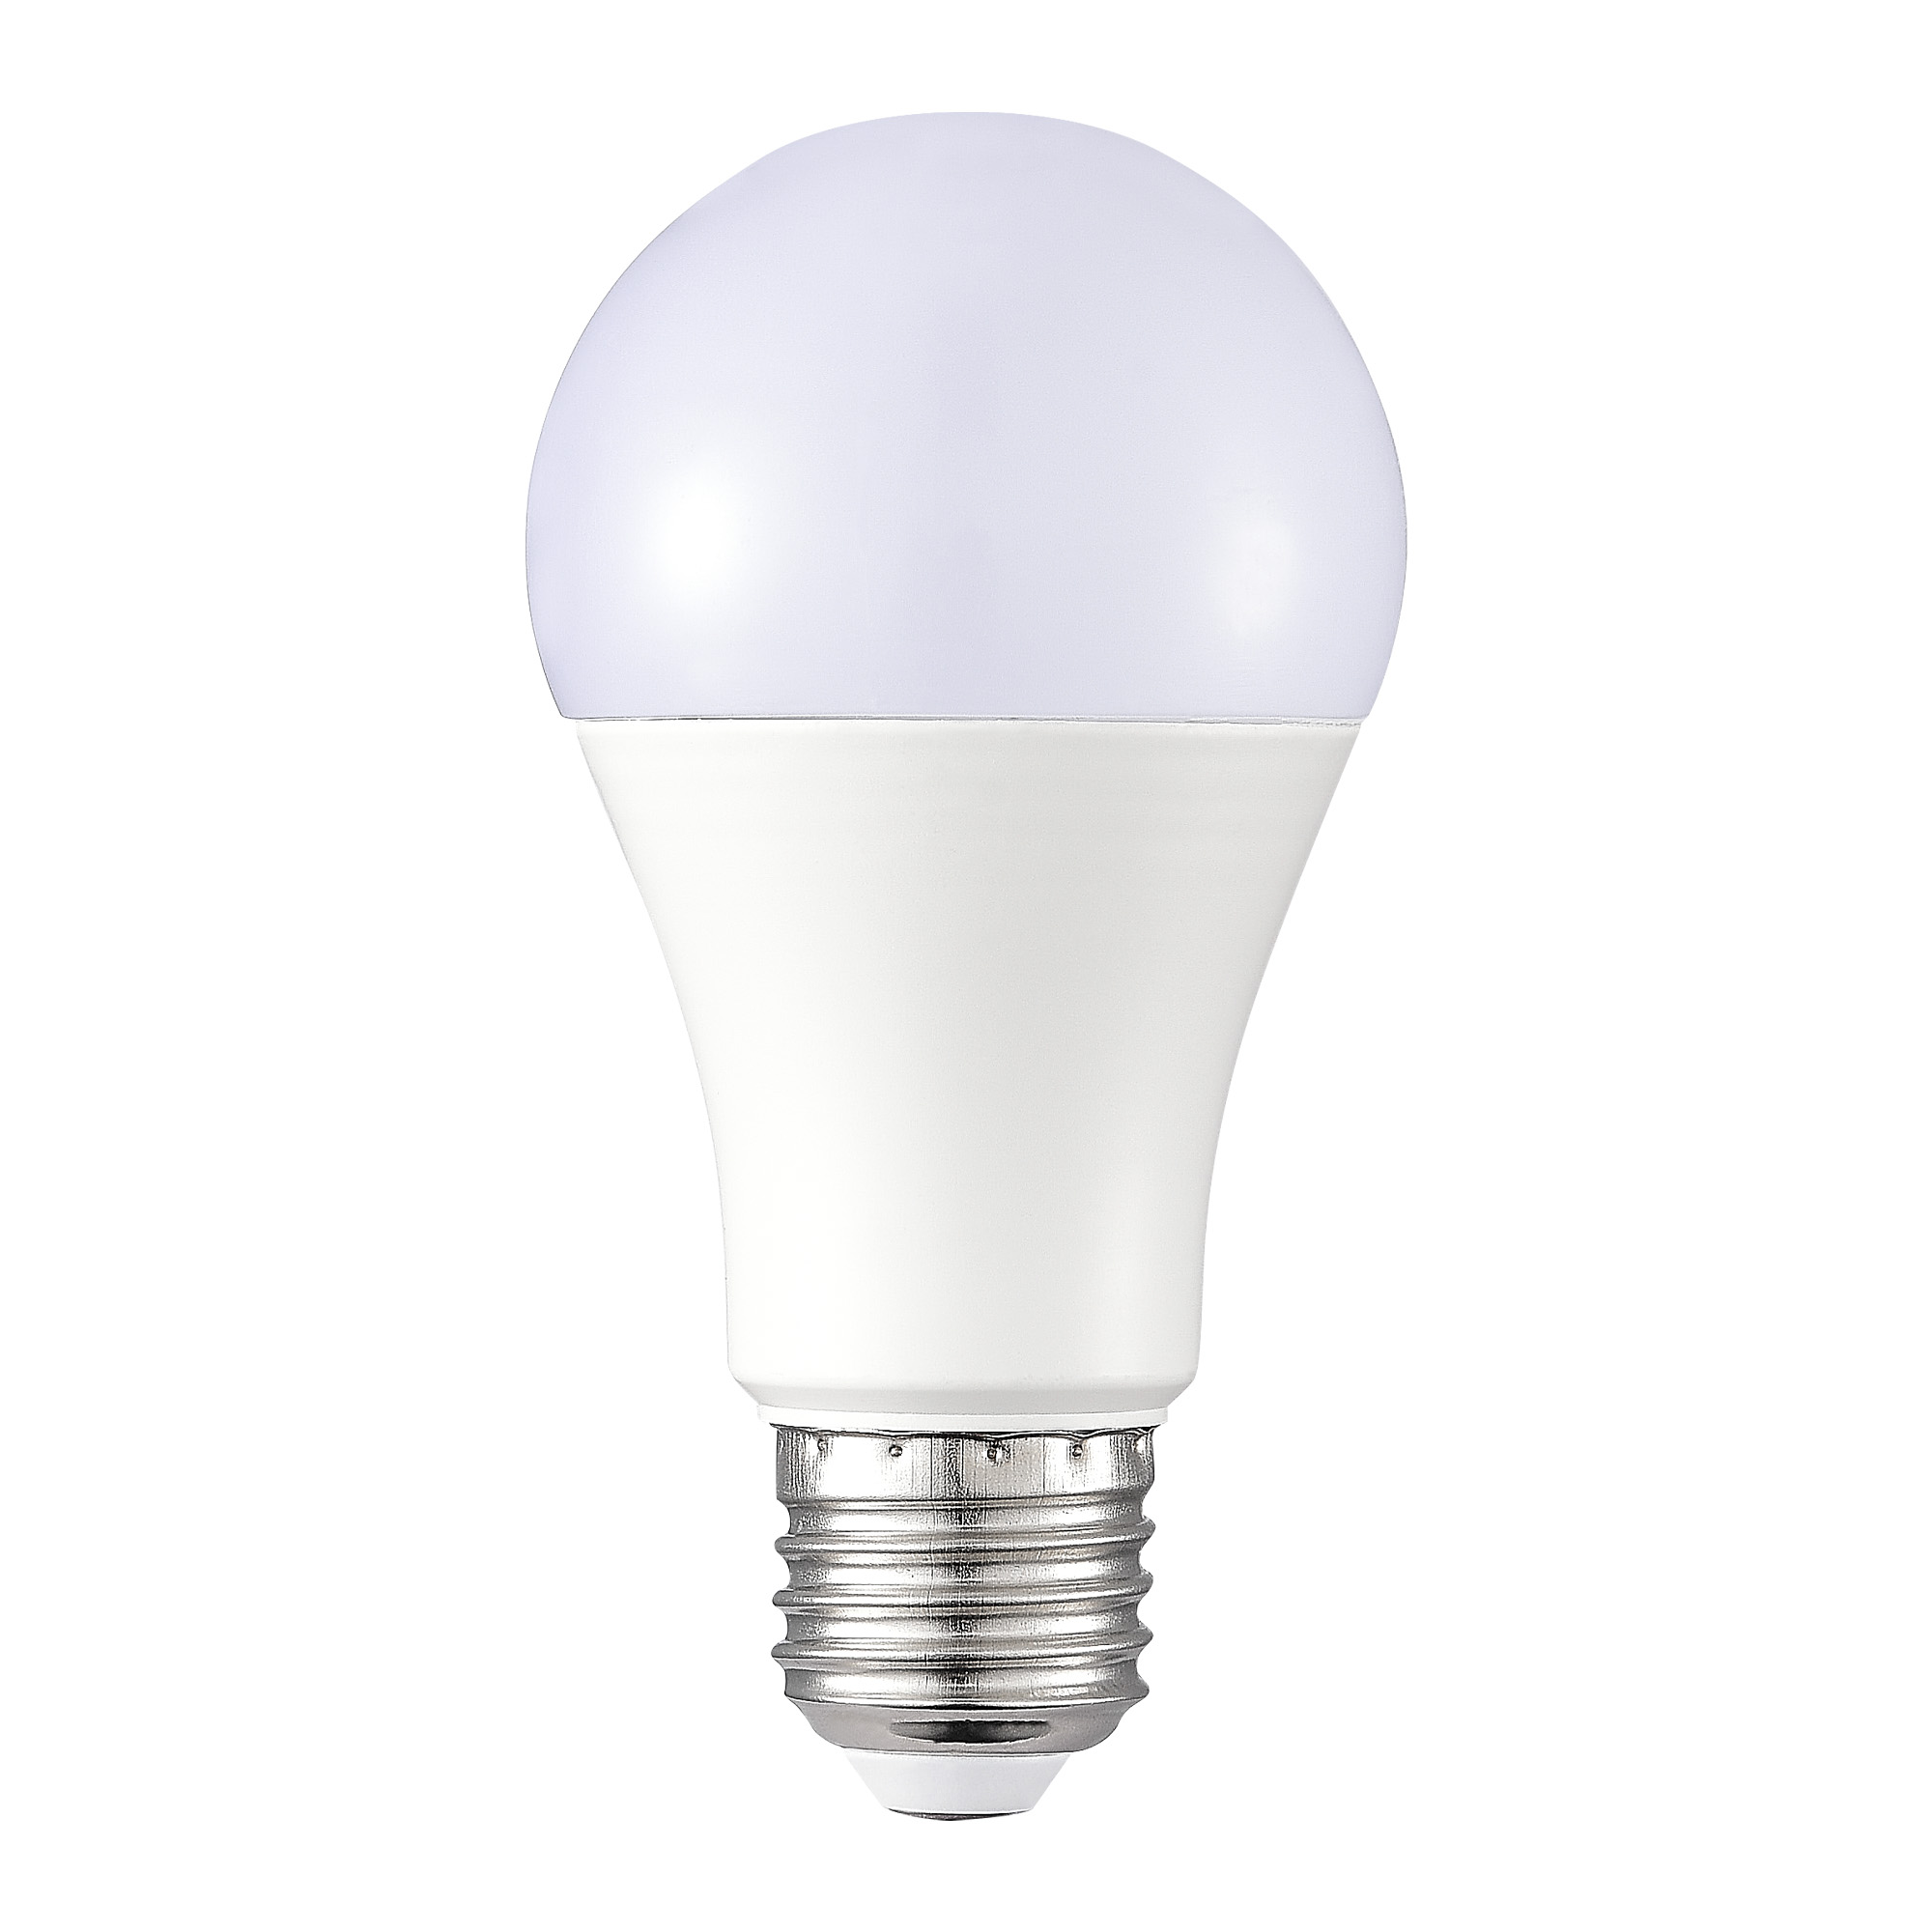 Светодиодная лампа ST Luce 9W 810lm 2700K-6500K E27 ST9100.279.09, цвет белый - фото 1